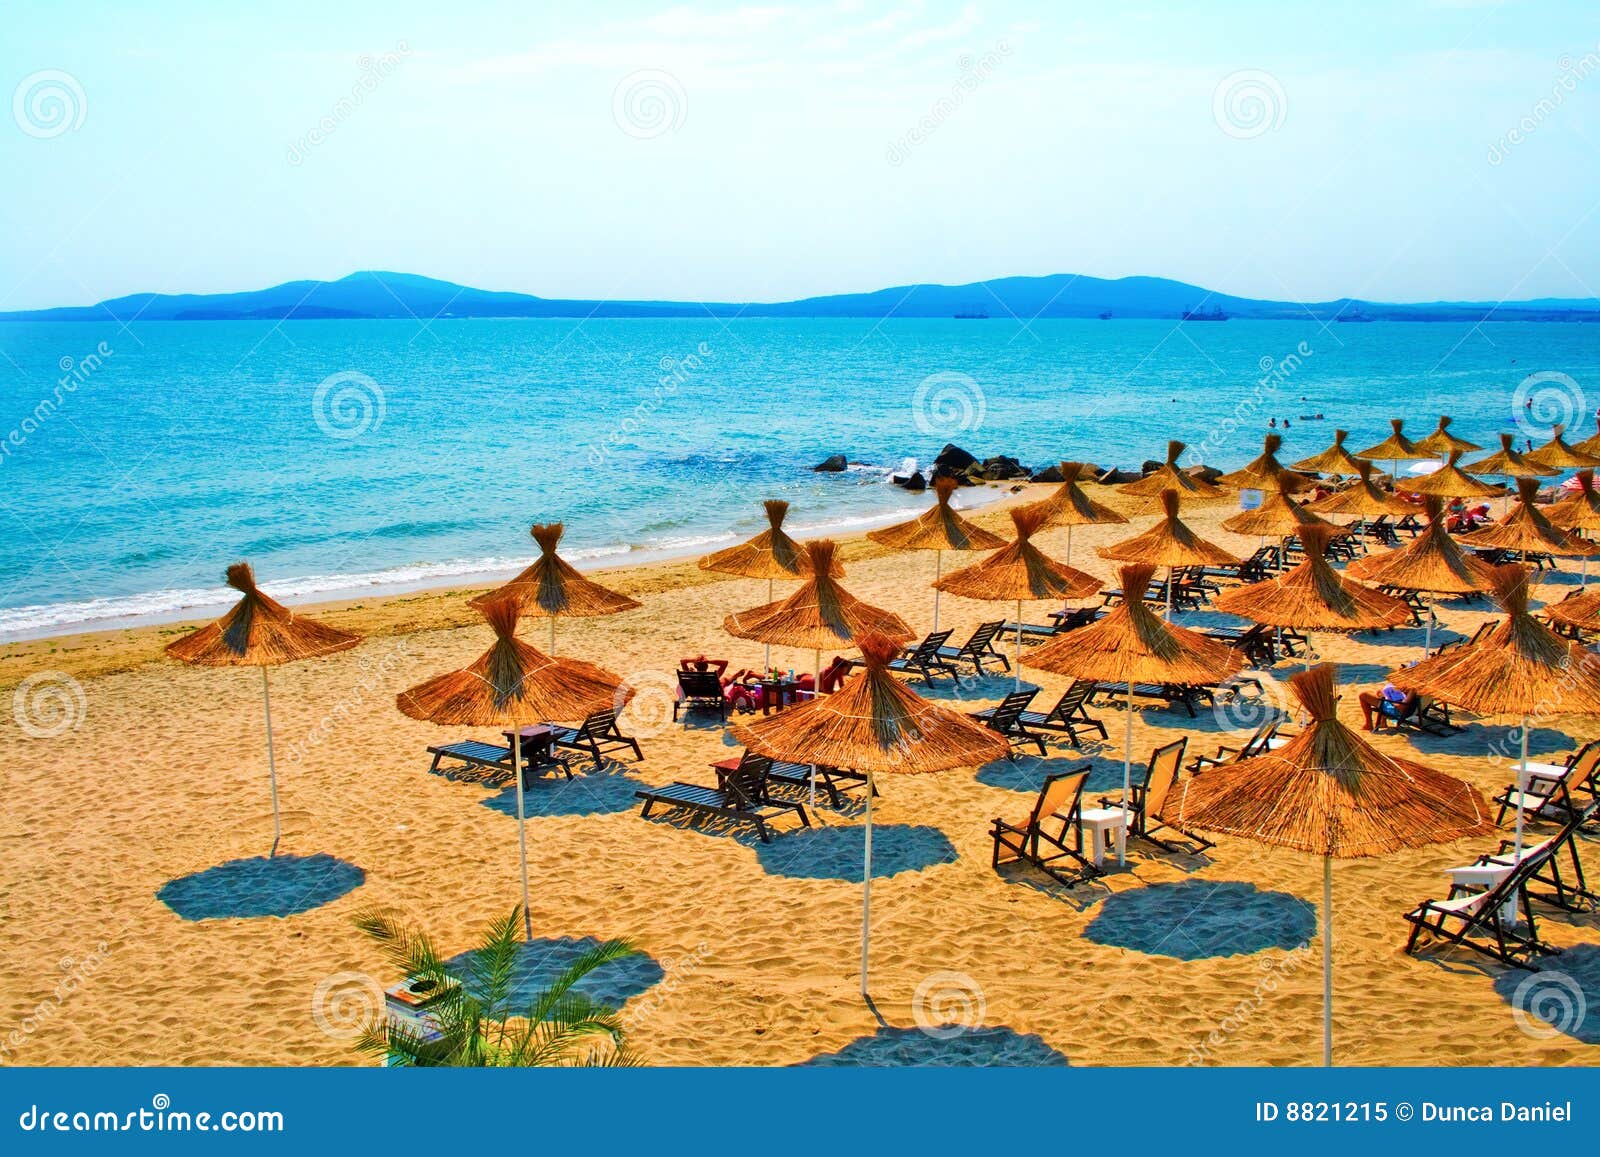 straw umbrellas on peaceful beach in bulgaria